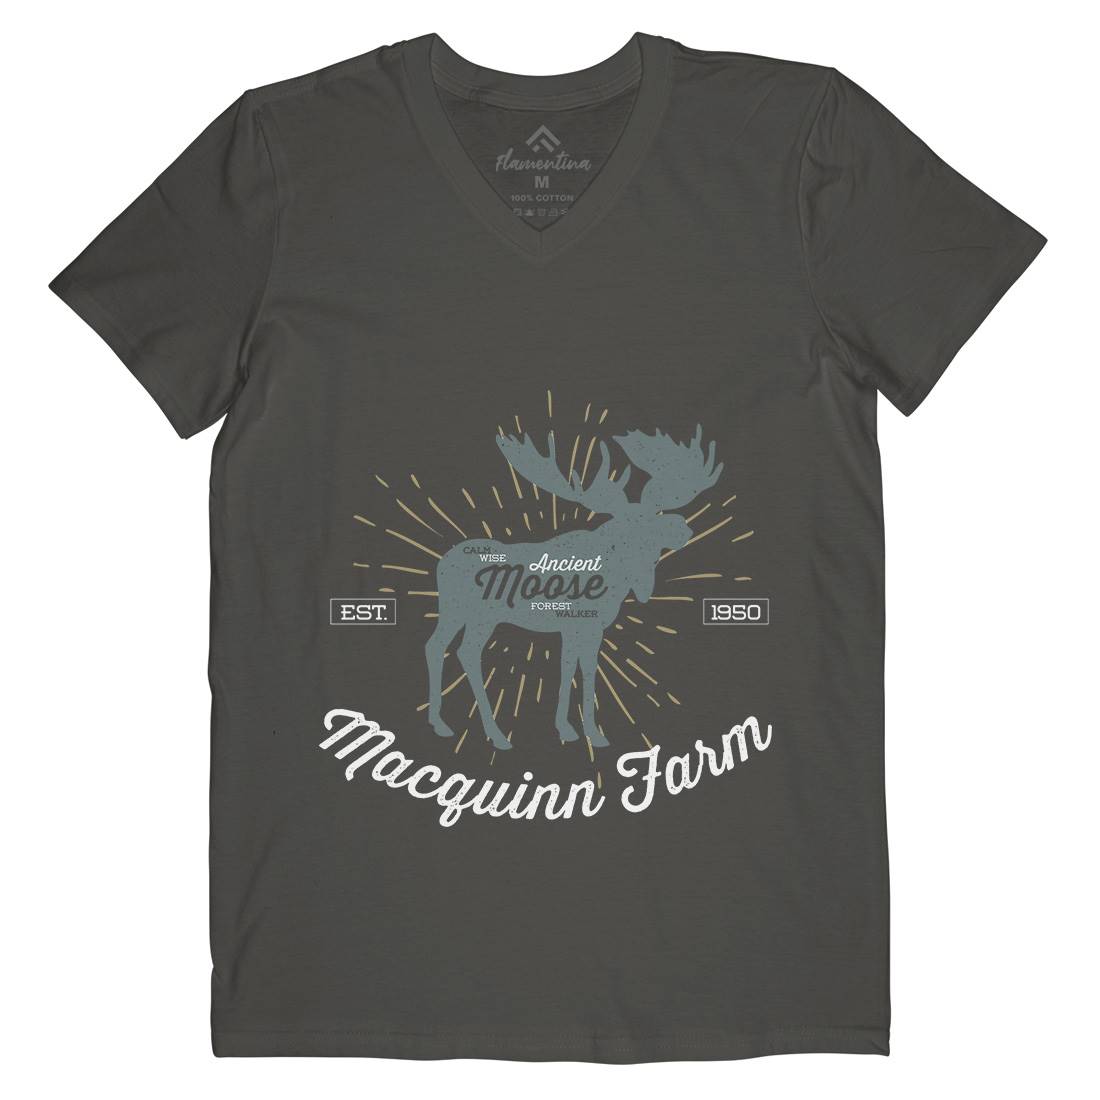 Moose Farm Mens V-Neck T-Shirt Animals B740